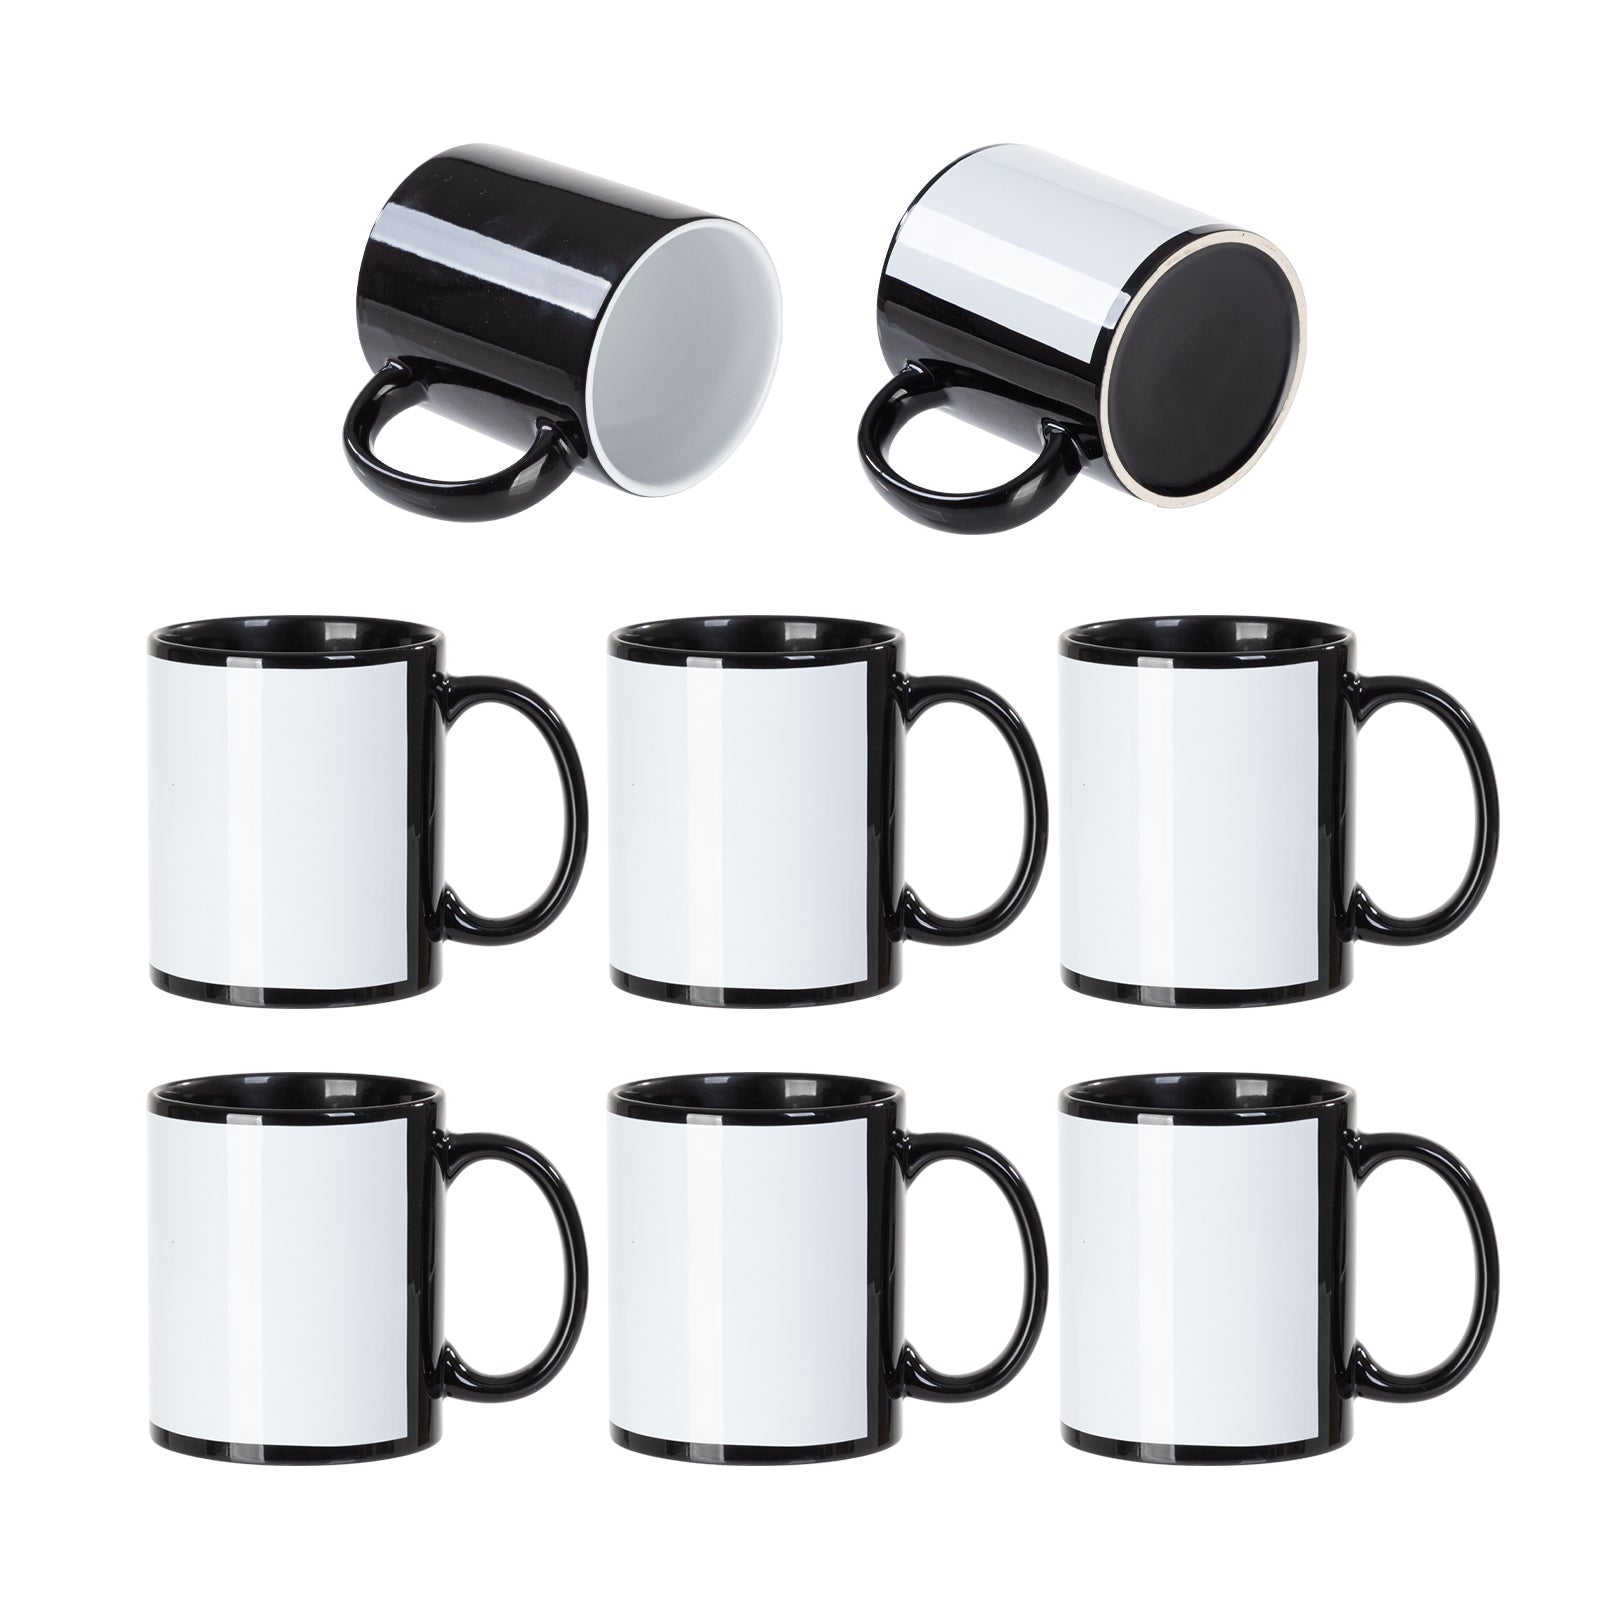 Wholesale 15 OZ Sublimation Coffee Mugs Blanks Black with White